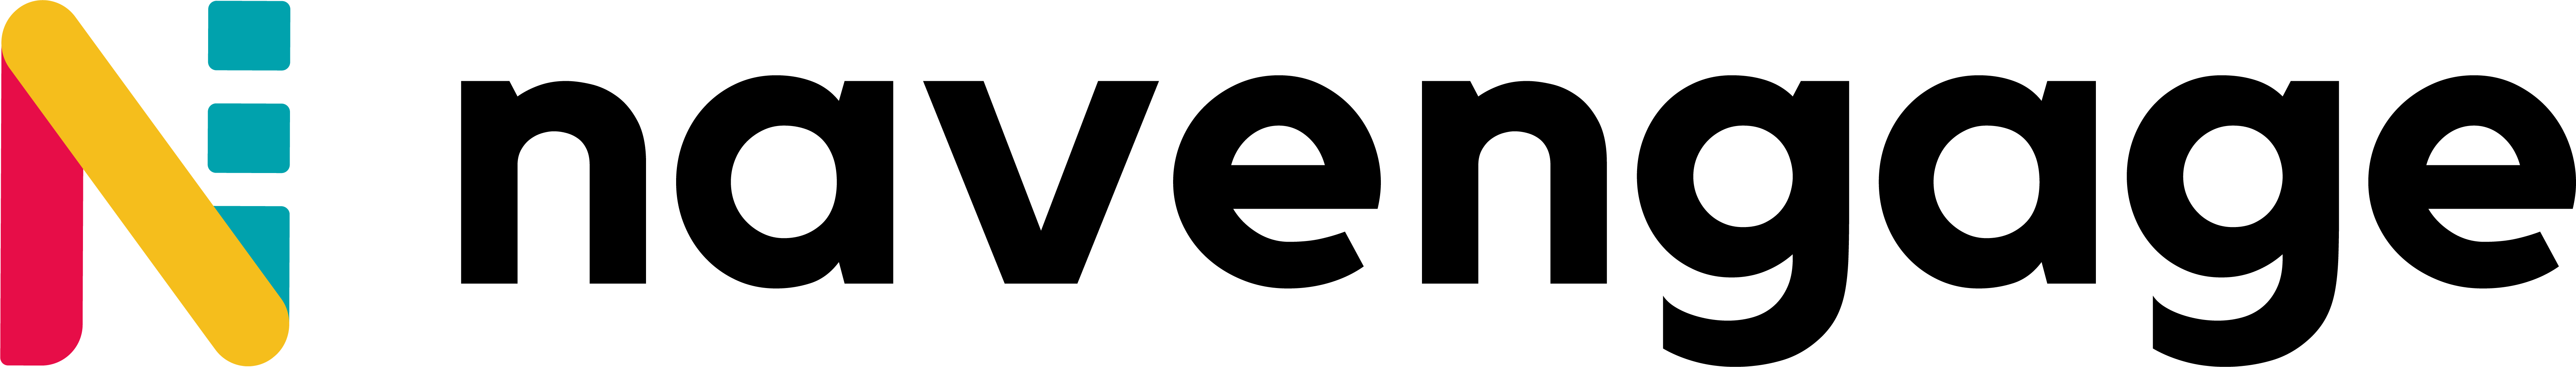 Navengage Logo